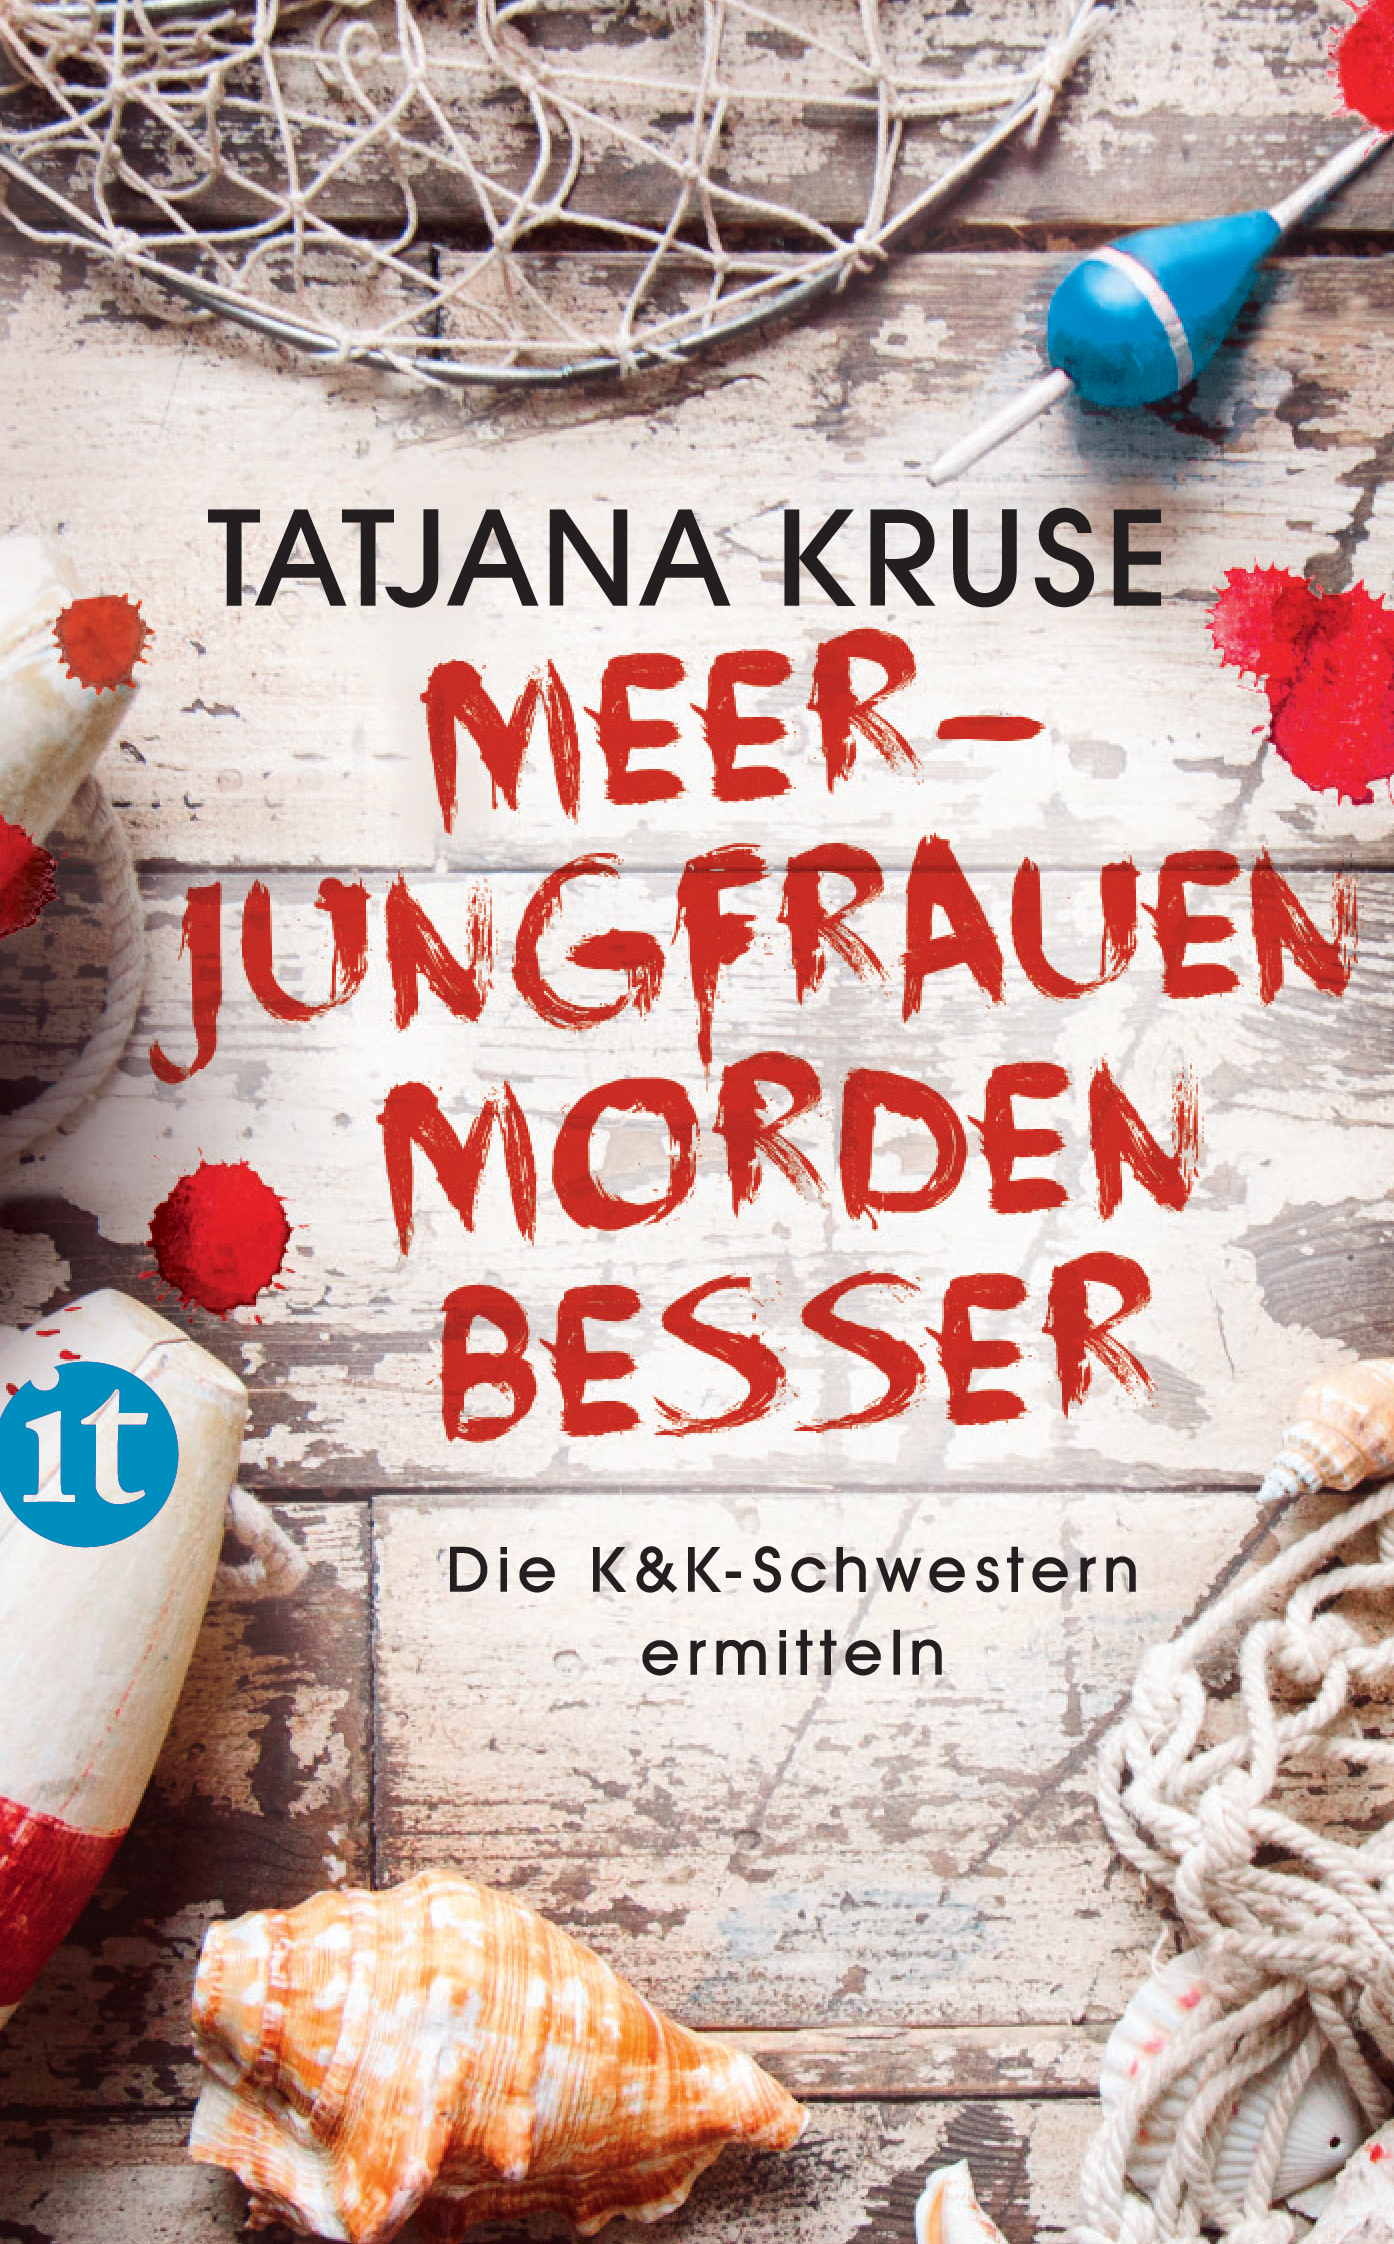 Meerjungfrauen morden besser: Lesung mit Tatjana Kruse